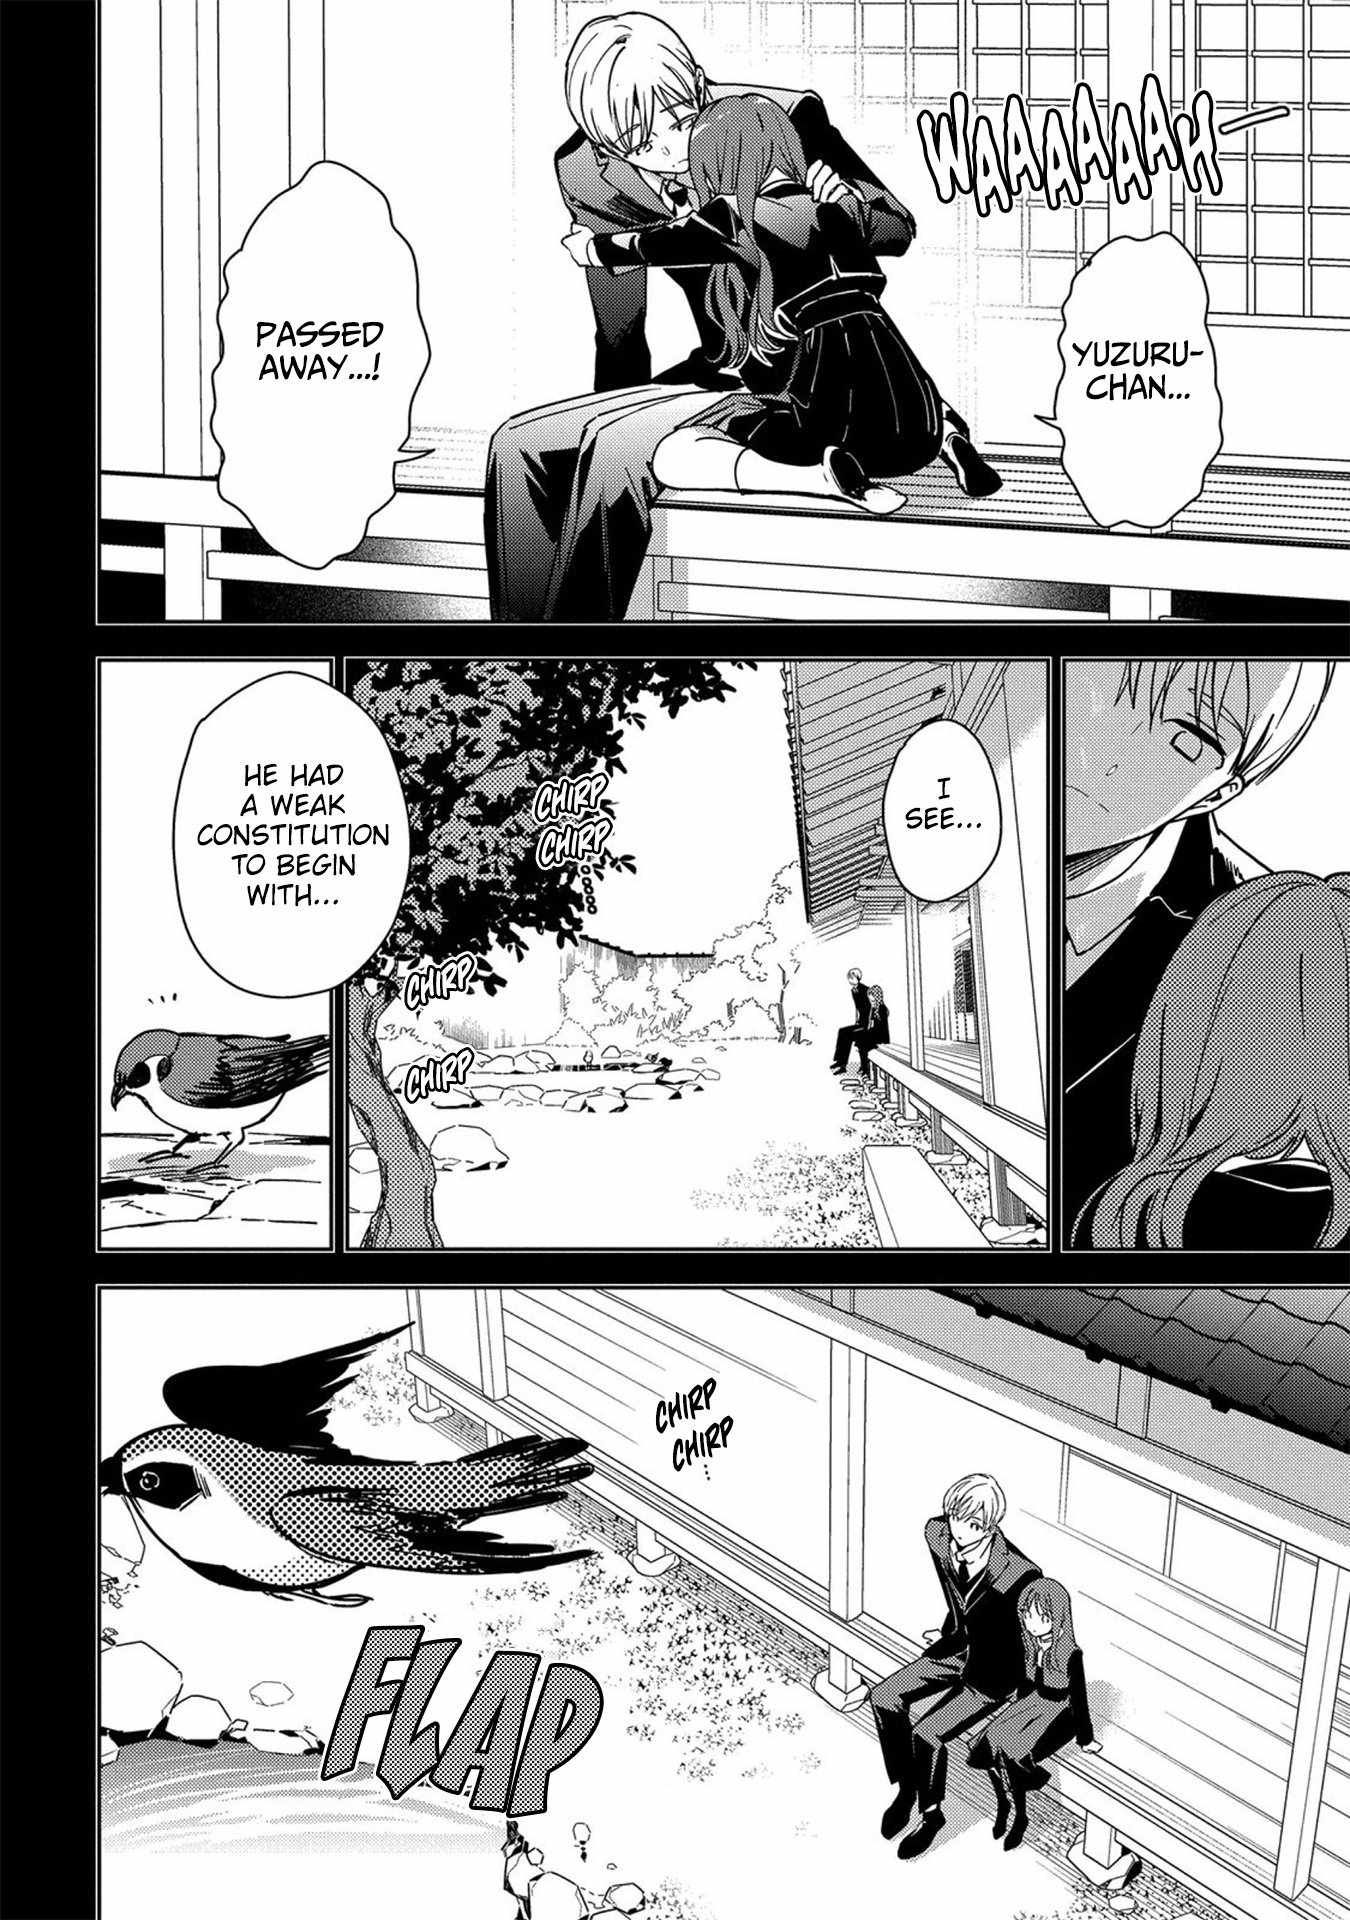 Masamune-kun's Revenge: Engagement Chapter 6-eng-li - Page 23